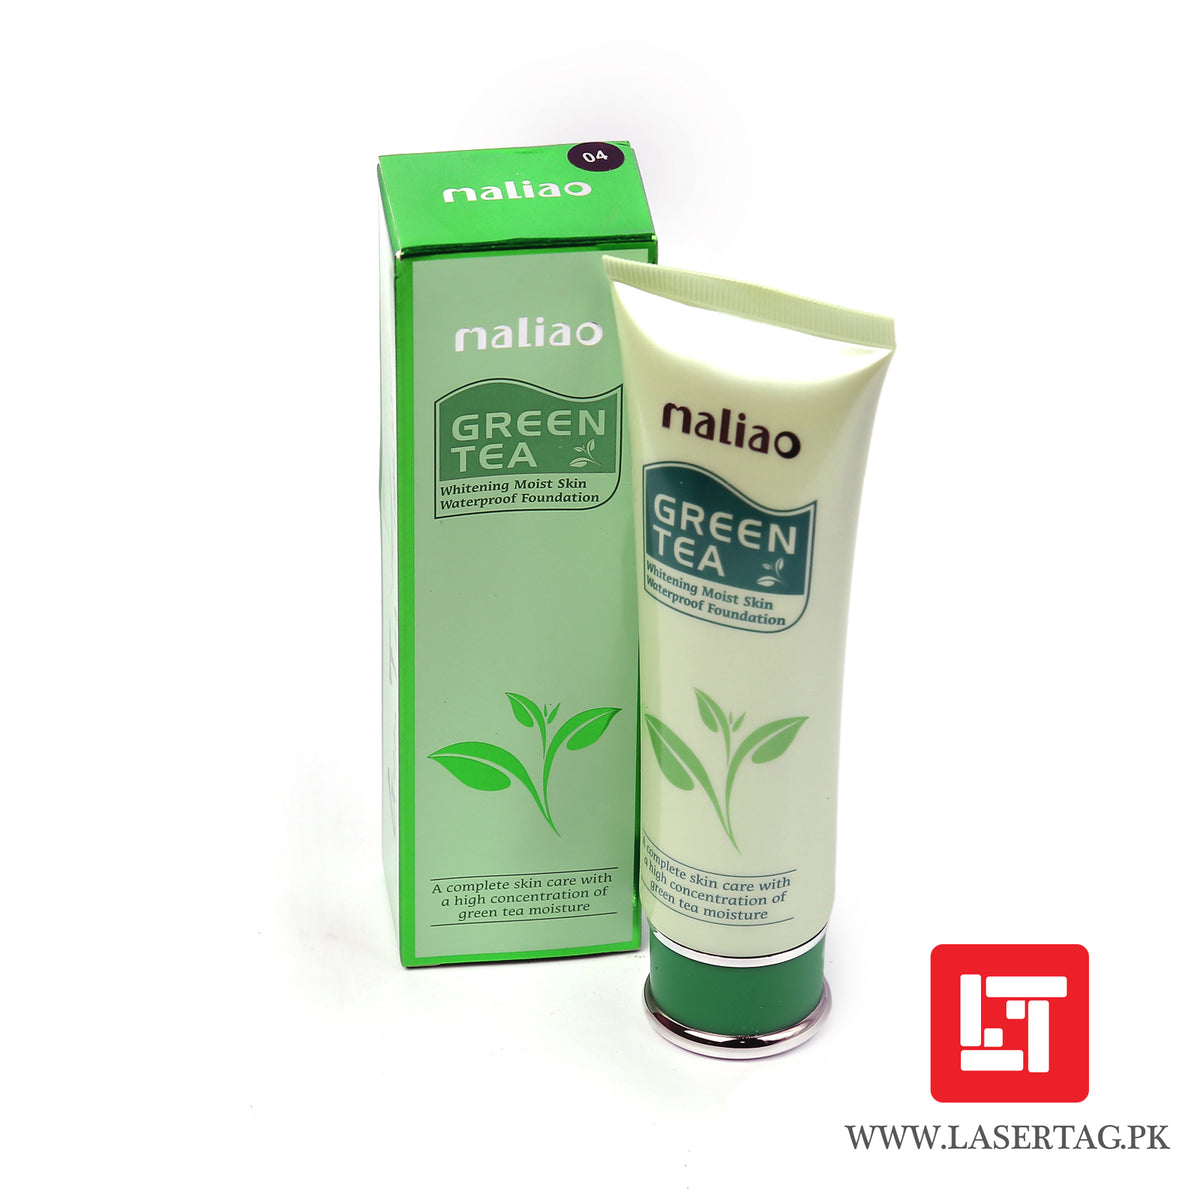 Maliao Green Tea Whitening Moist Skin Waterproof Foundation M104-04 80g freeshipping - lasertag.pk